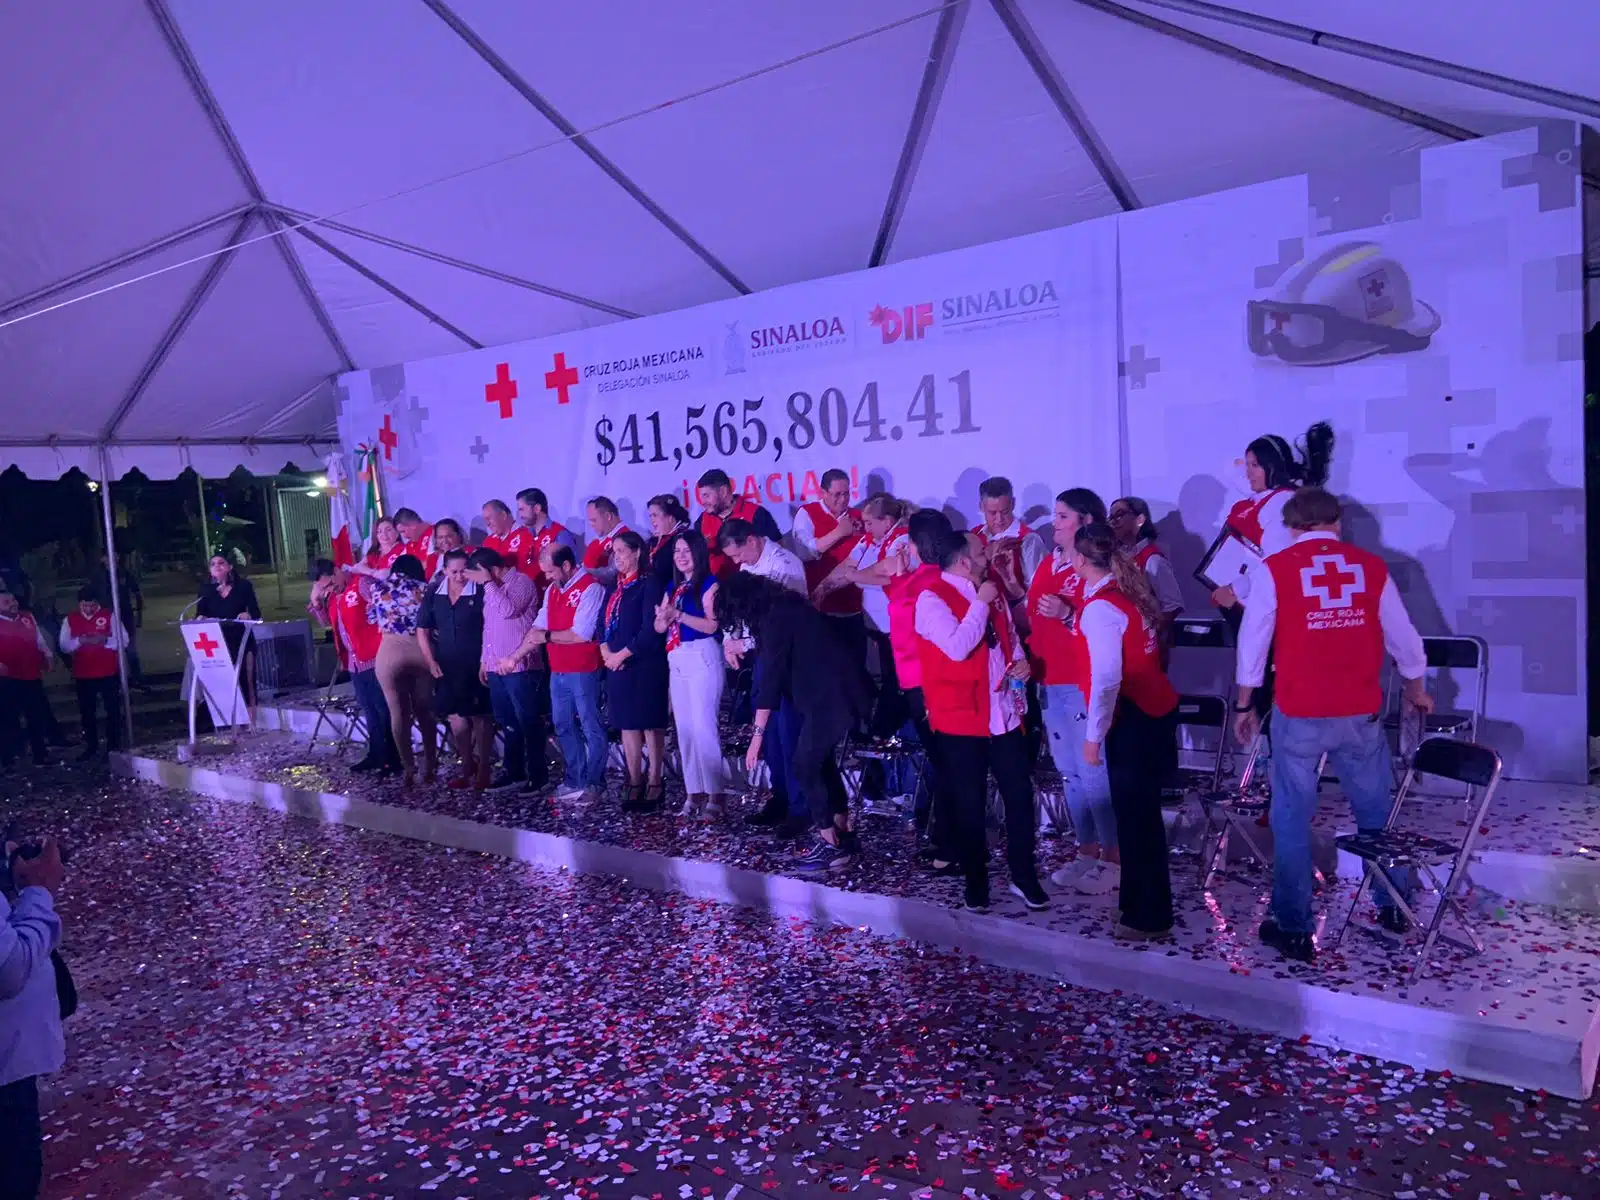 Personal de Cruz Roja Sinaloa festejando la meta en colecta